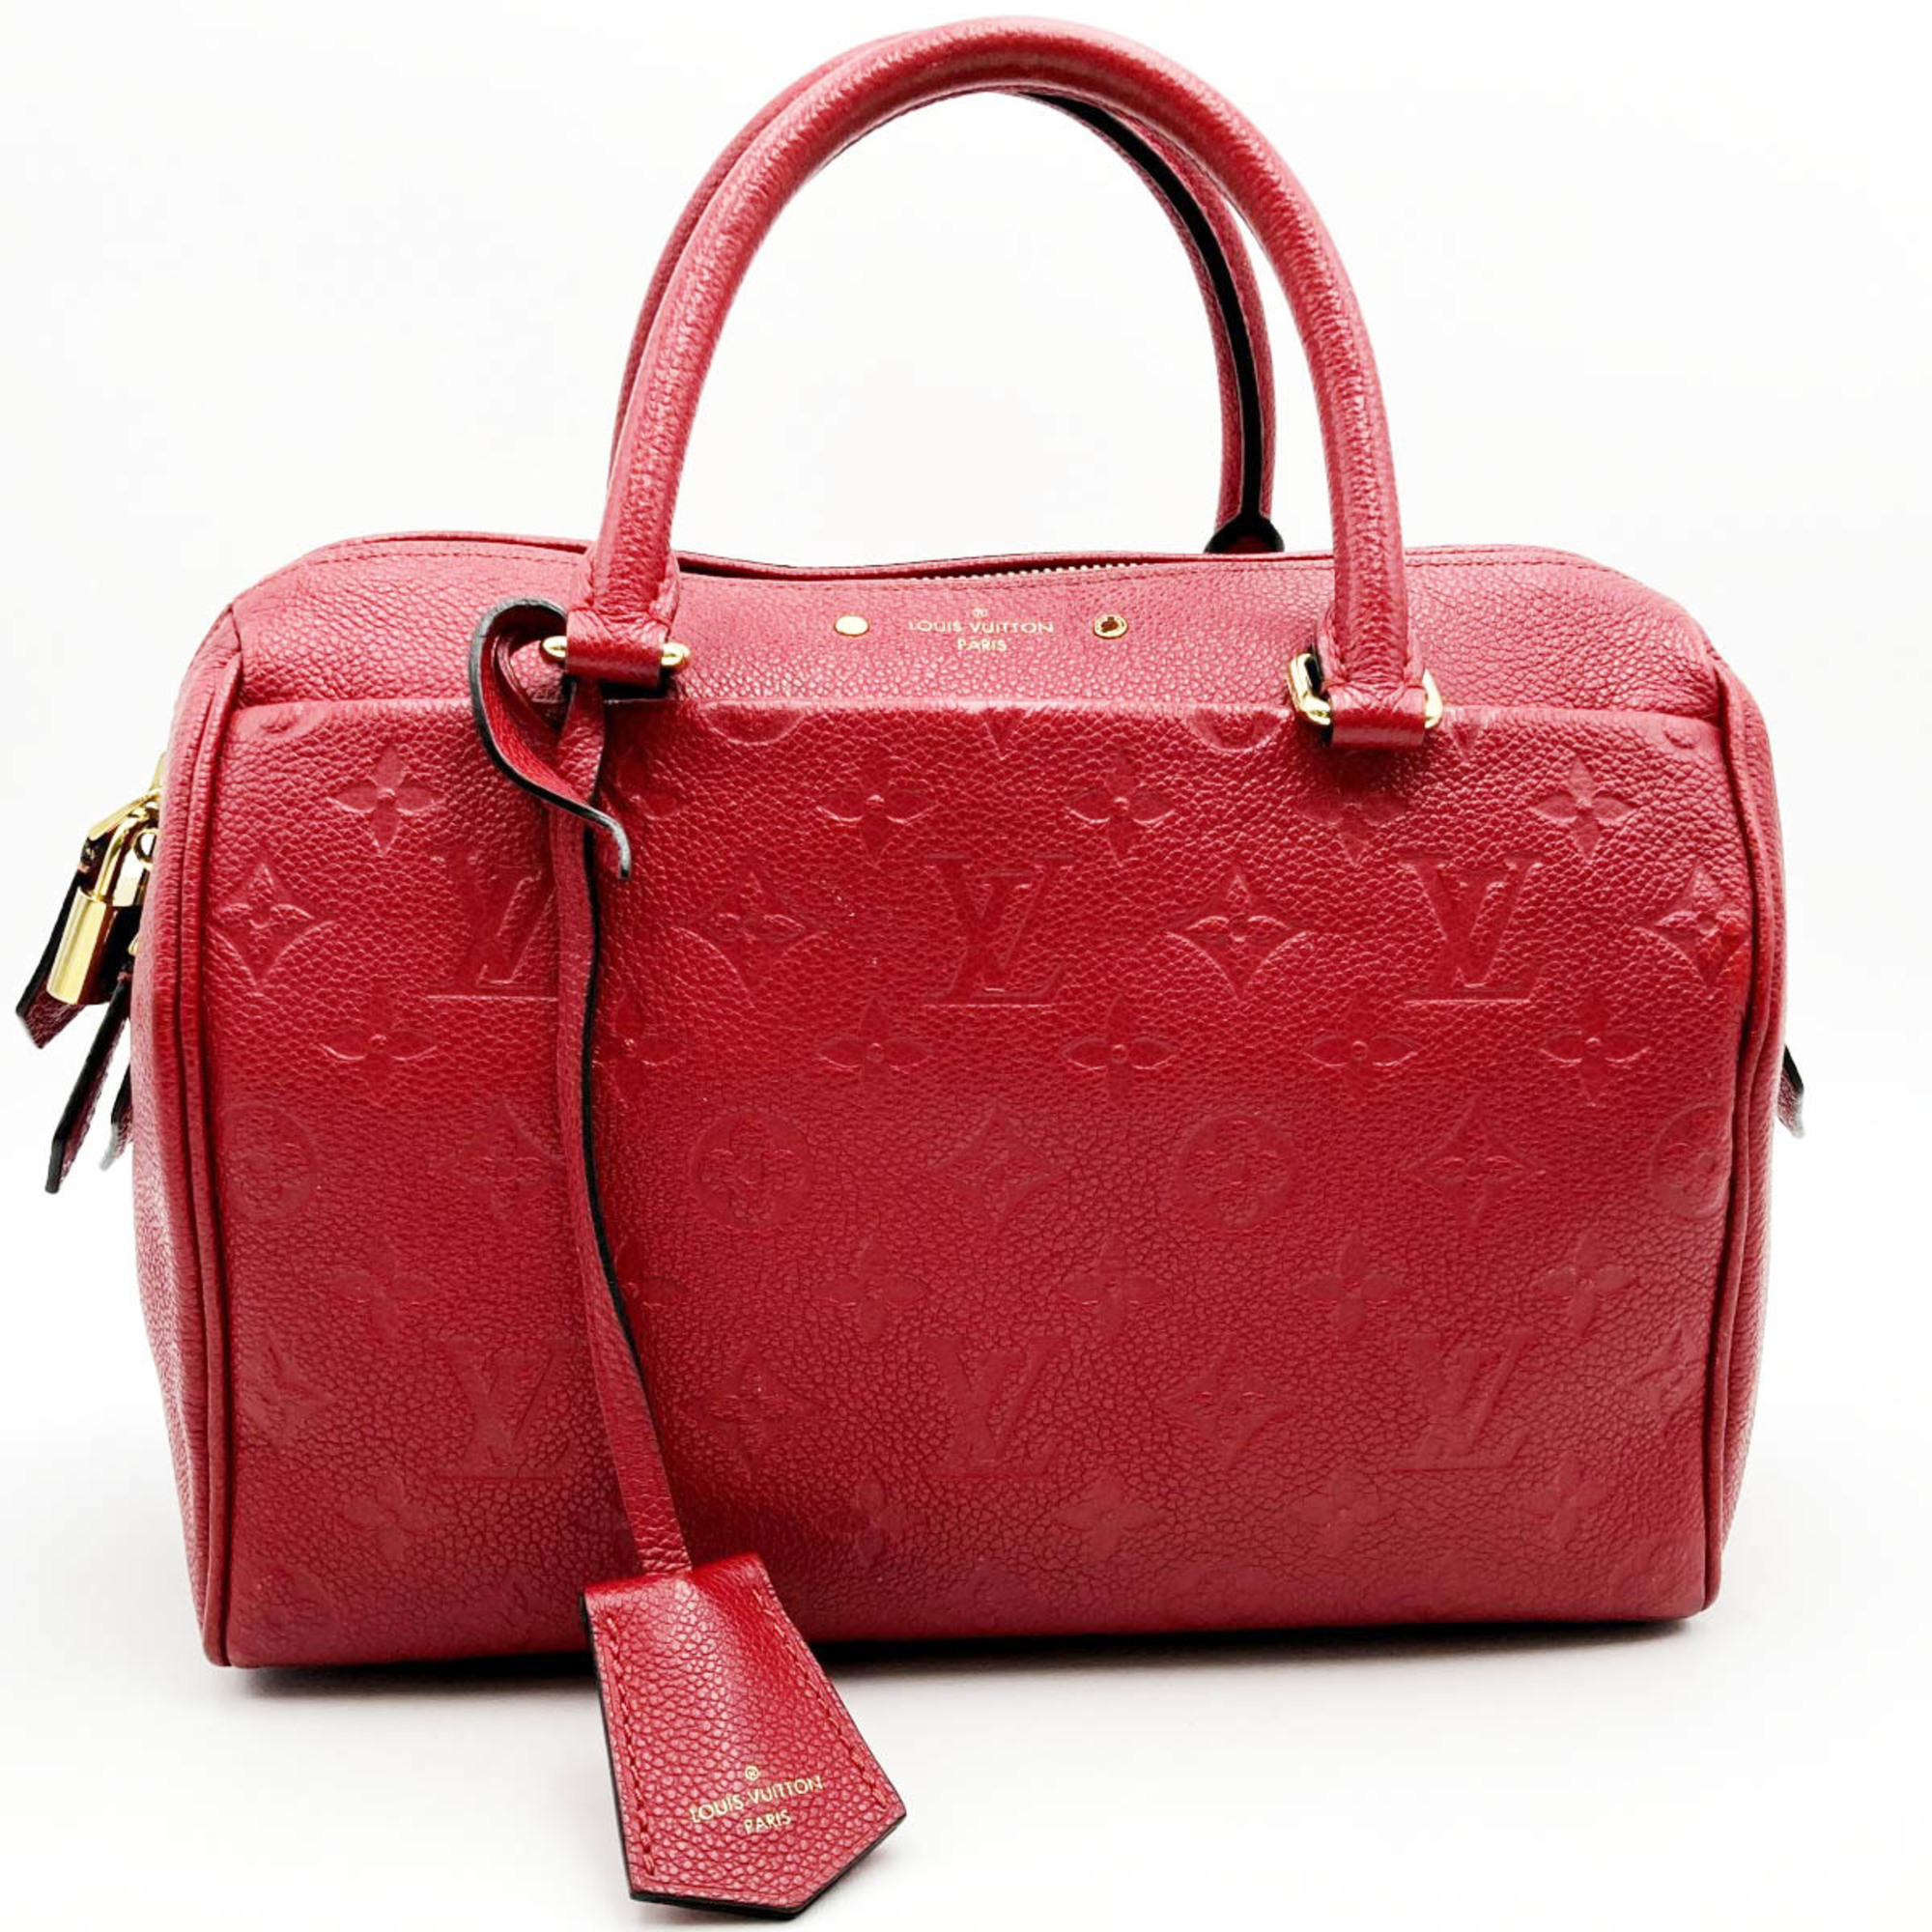 LOUIS VUITTON Speedy Bandouliere 25 Monogram Empreinte Handbag Boston Bag Red Leather Ladies M44145 USED